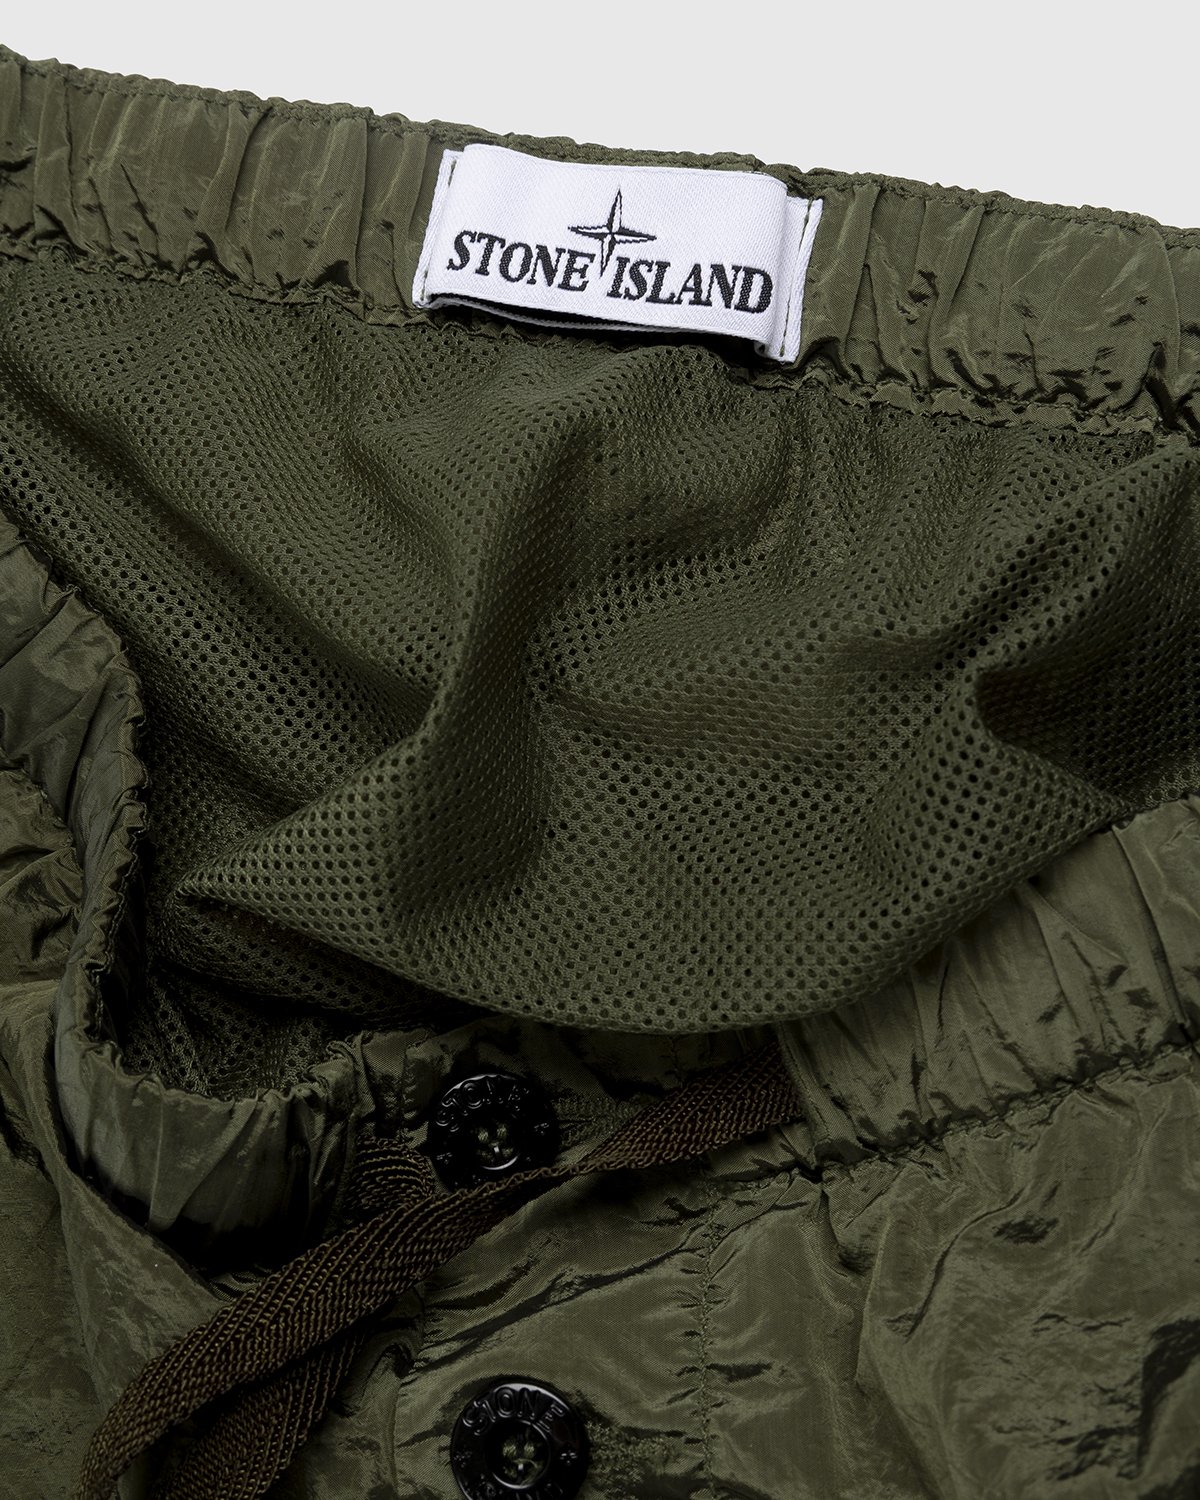 Stone Island - B0643 Nylon Metal Bermuda Shorts Olive - Clothing - Green - Image 6